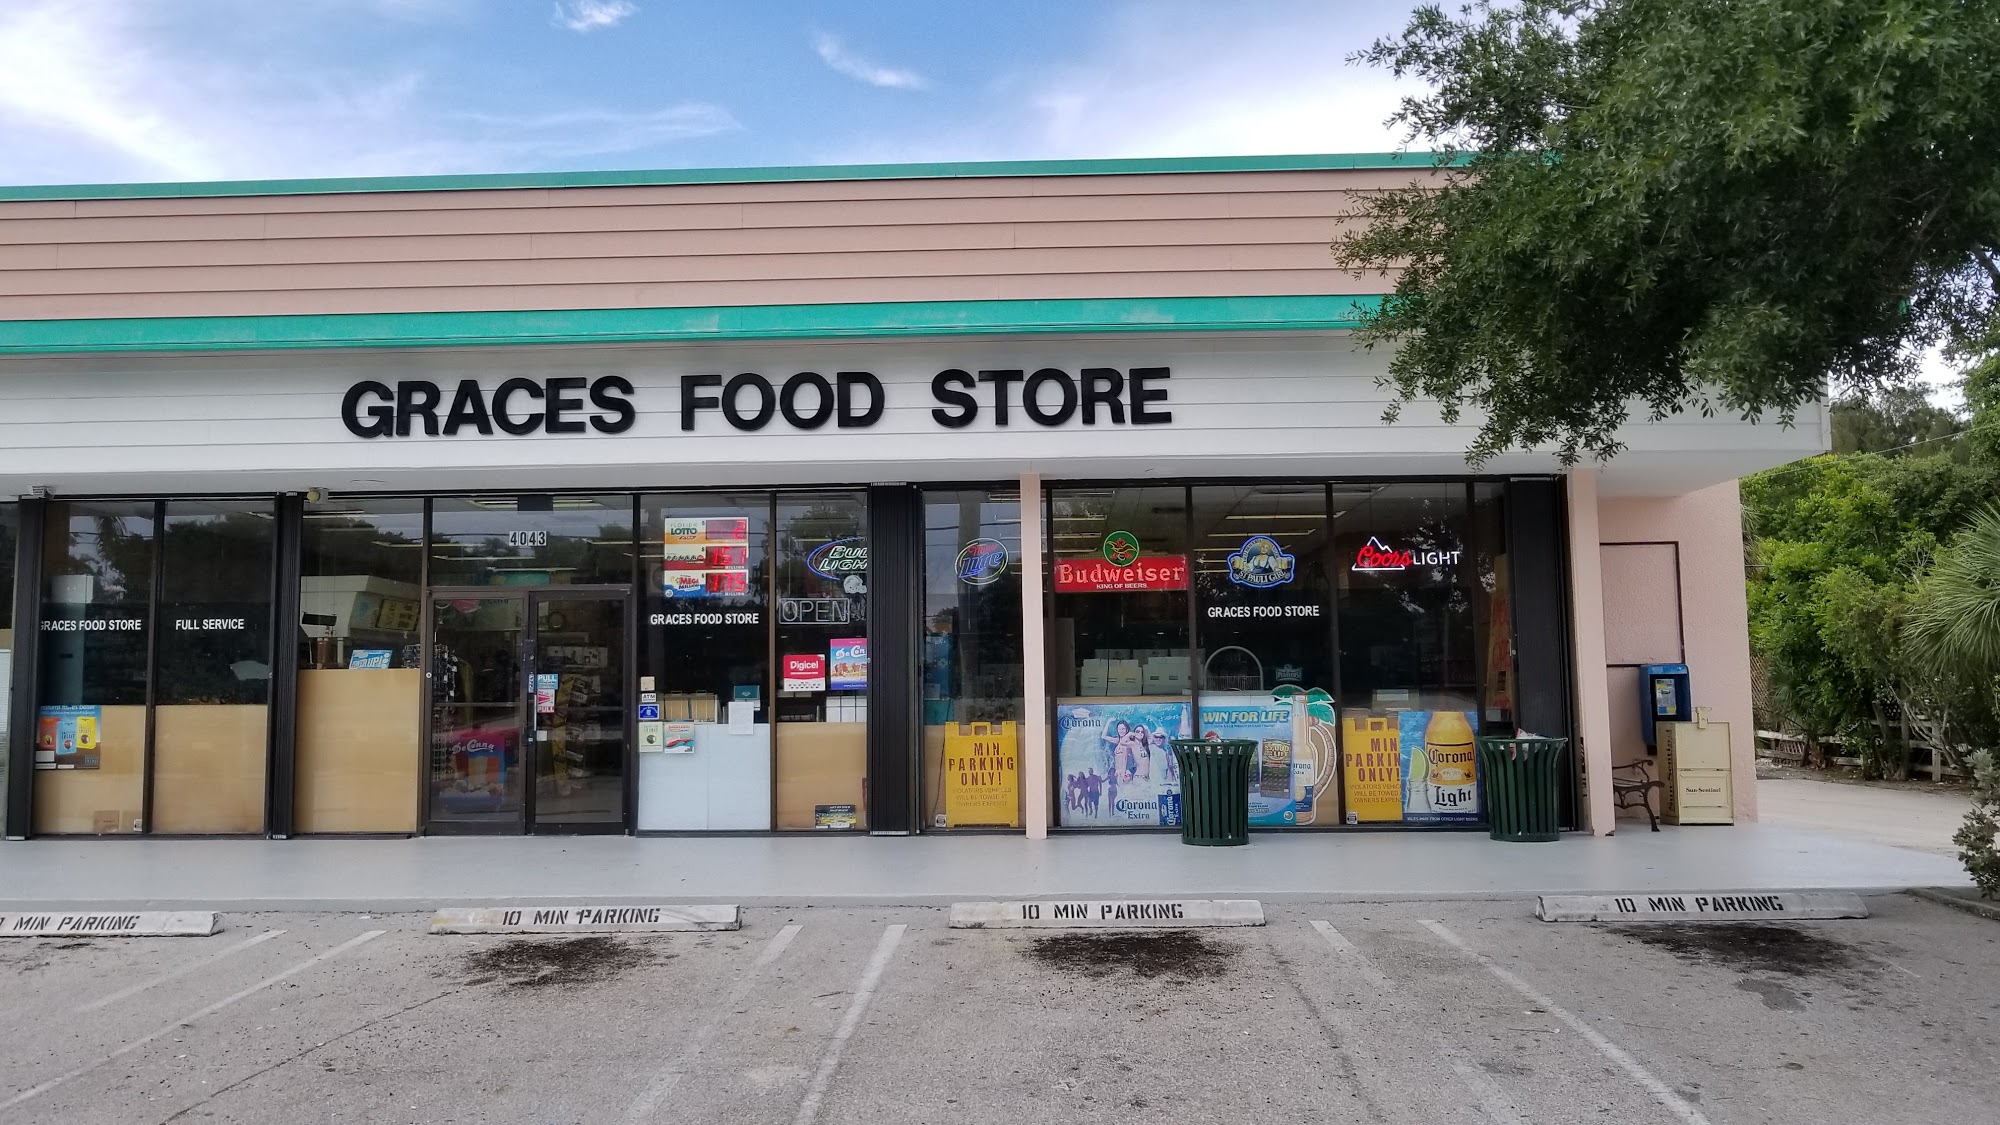 Graces Food Store